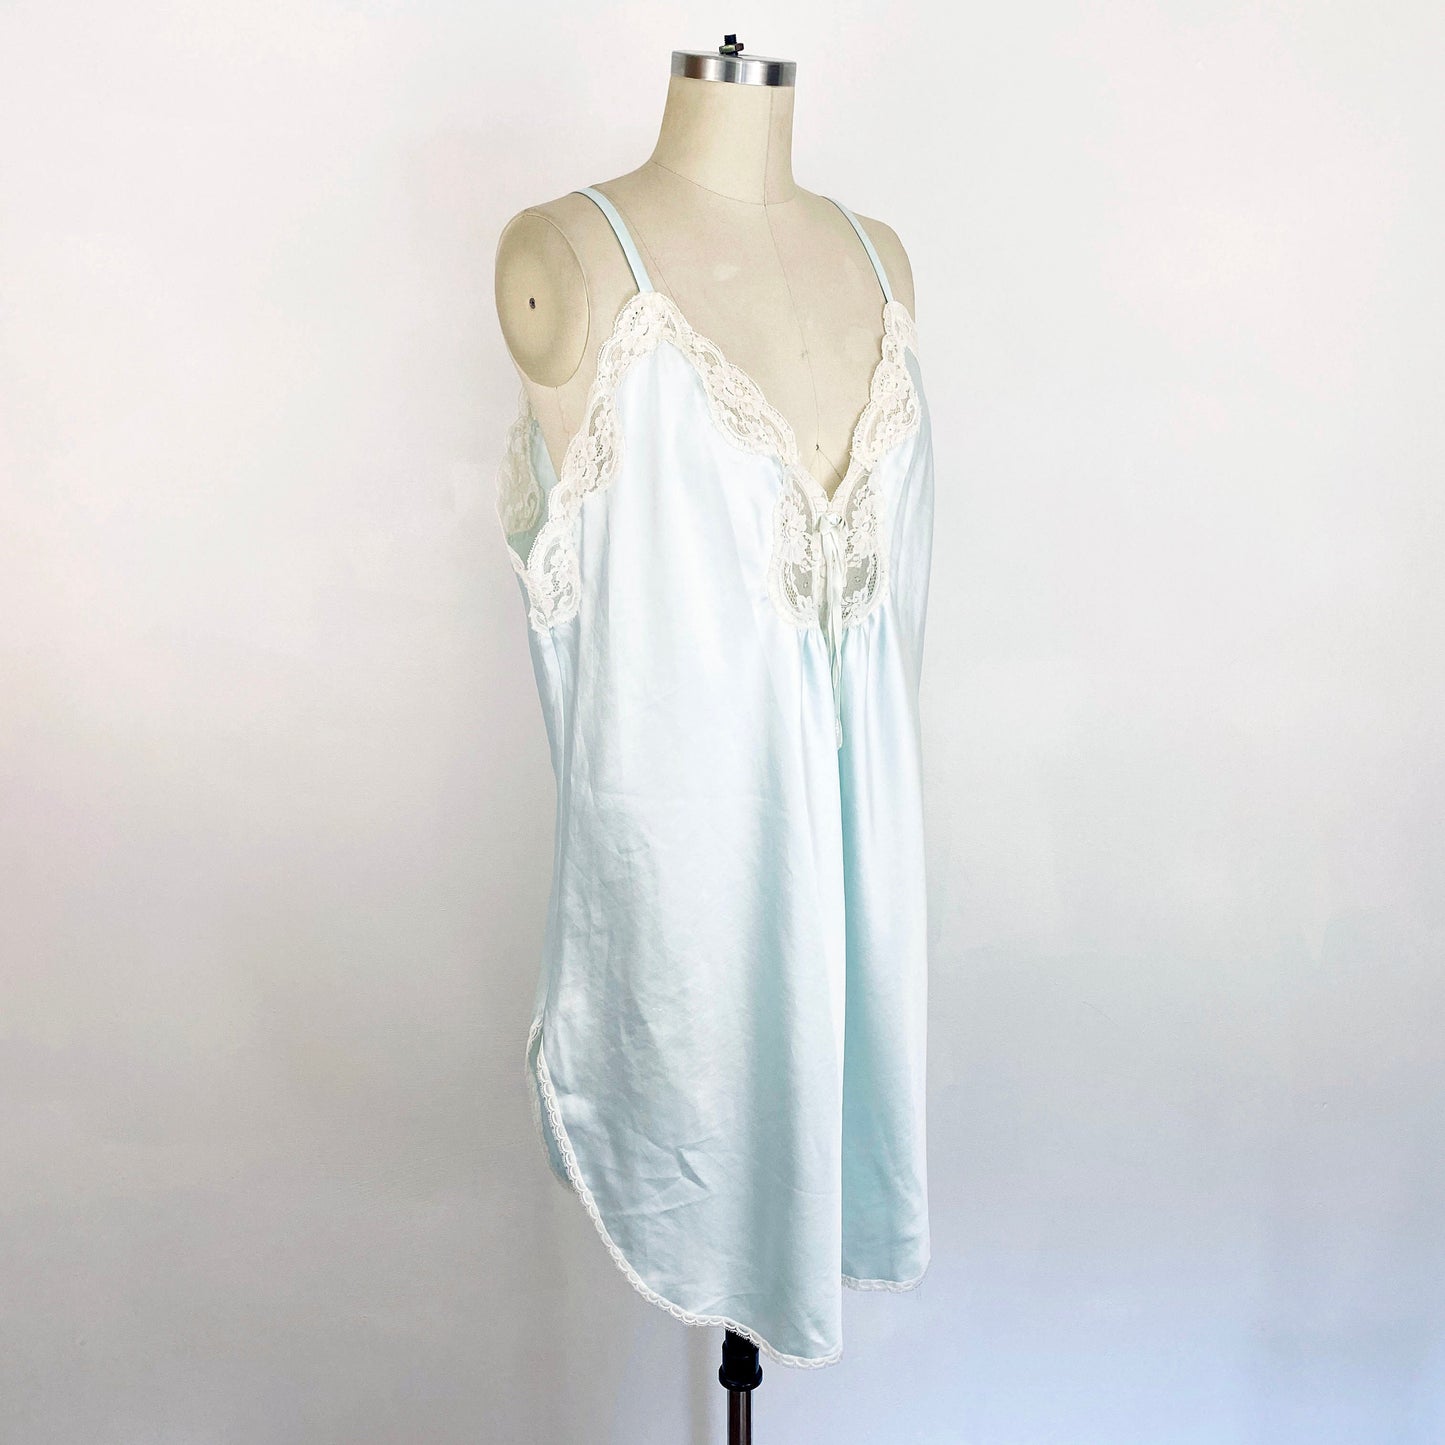 1980s Christian Dior Light Blue Silky Stain Lace Chemise Slip Robe Set Peignoir Sexy Lingerie Sleepwear Romantic DIOR / Size Medium/Large